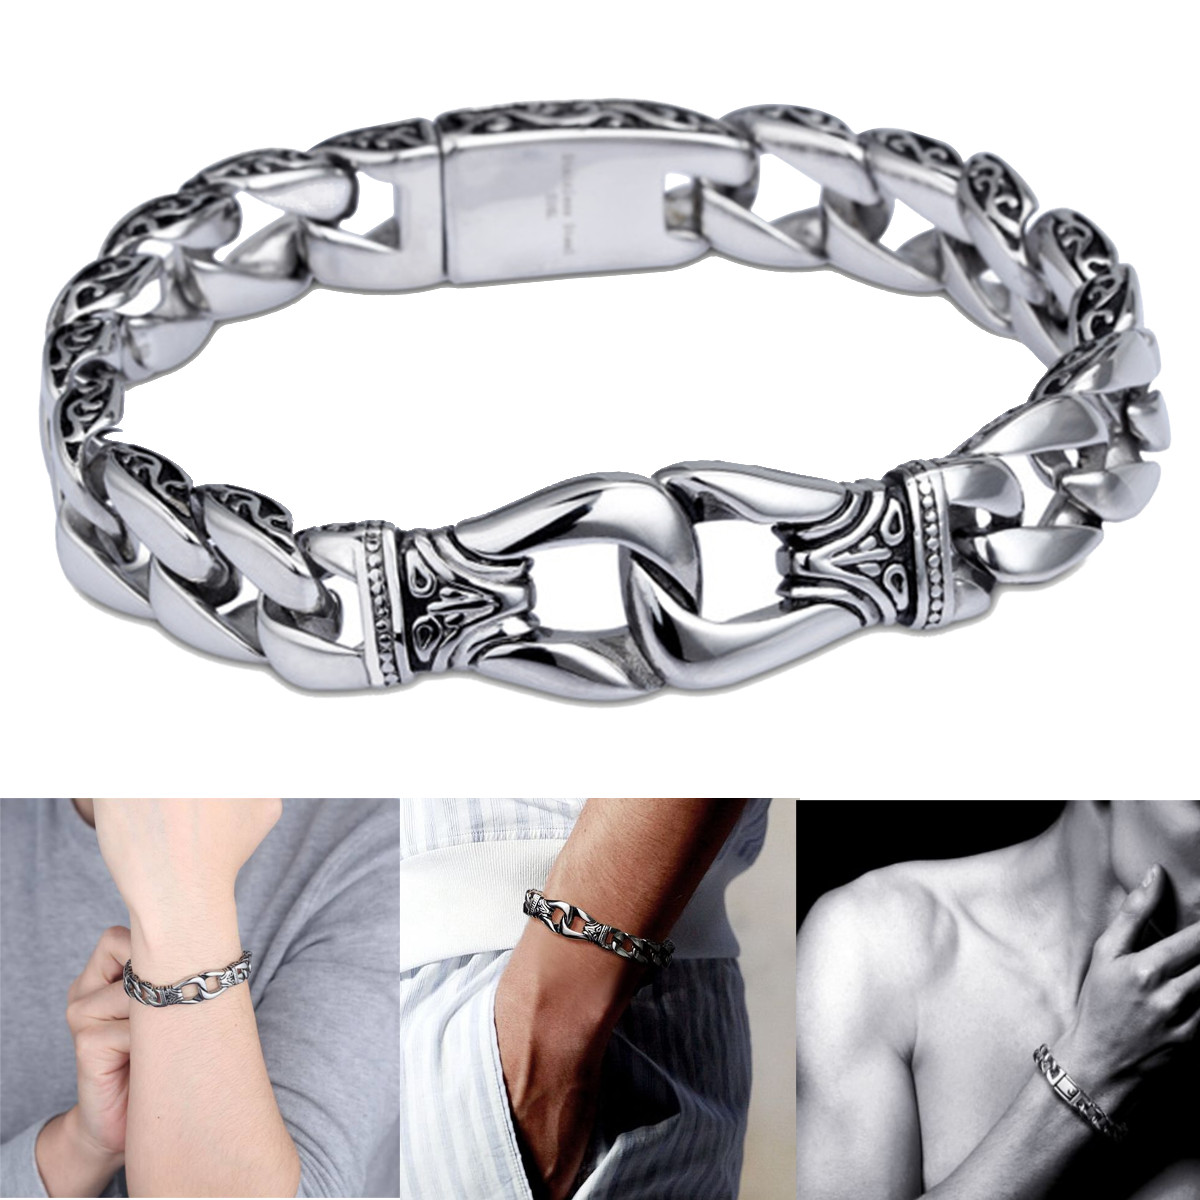 

Men's Stainless Steel Polished Silver Bracelet